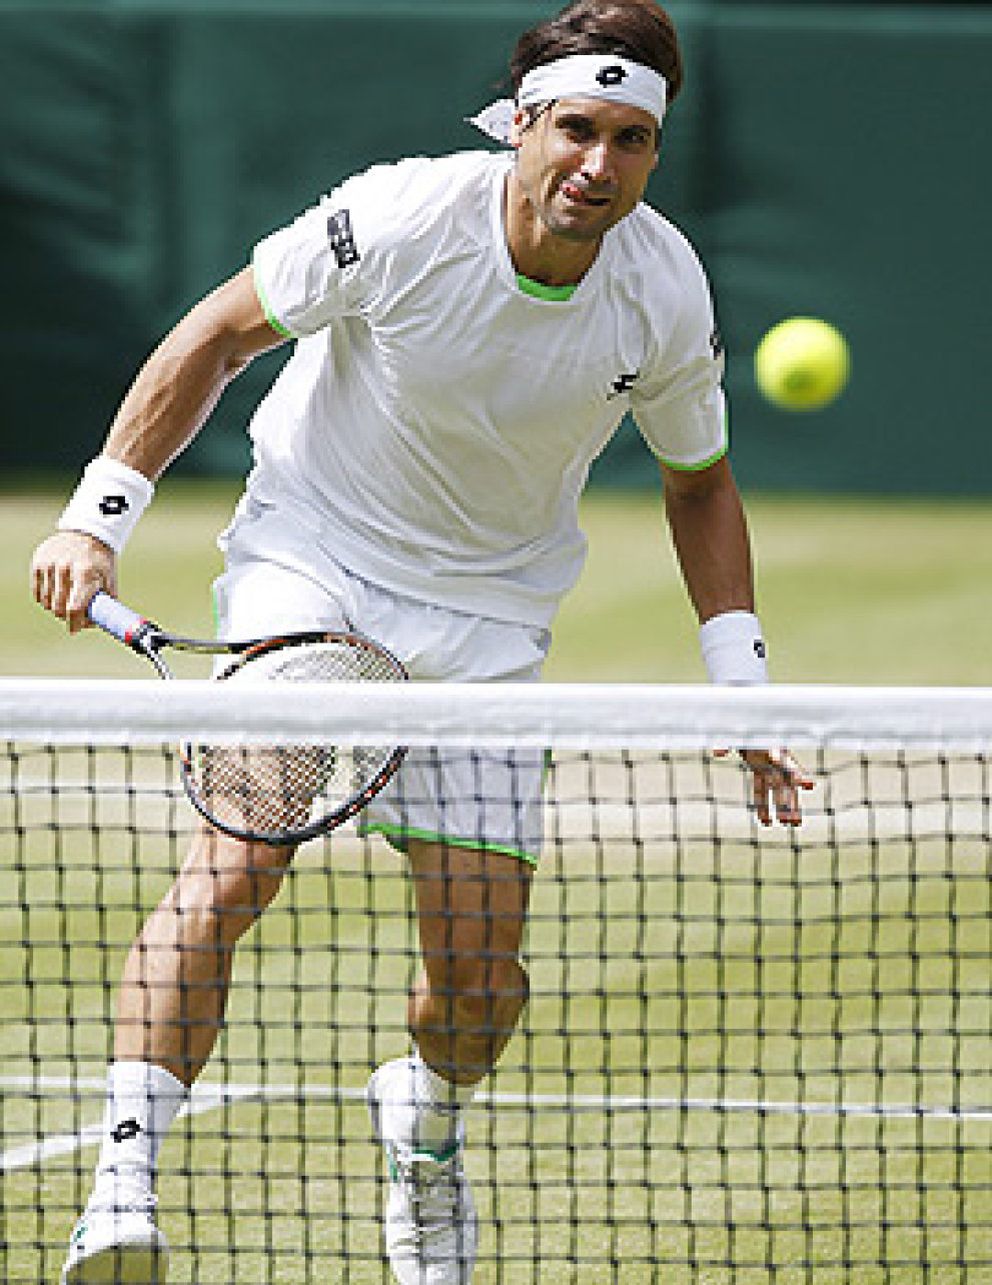 Foto: Wimbledon da buenas noticias a Ferrer: por primera vez, es el número tres de la ATP